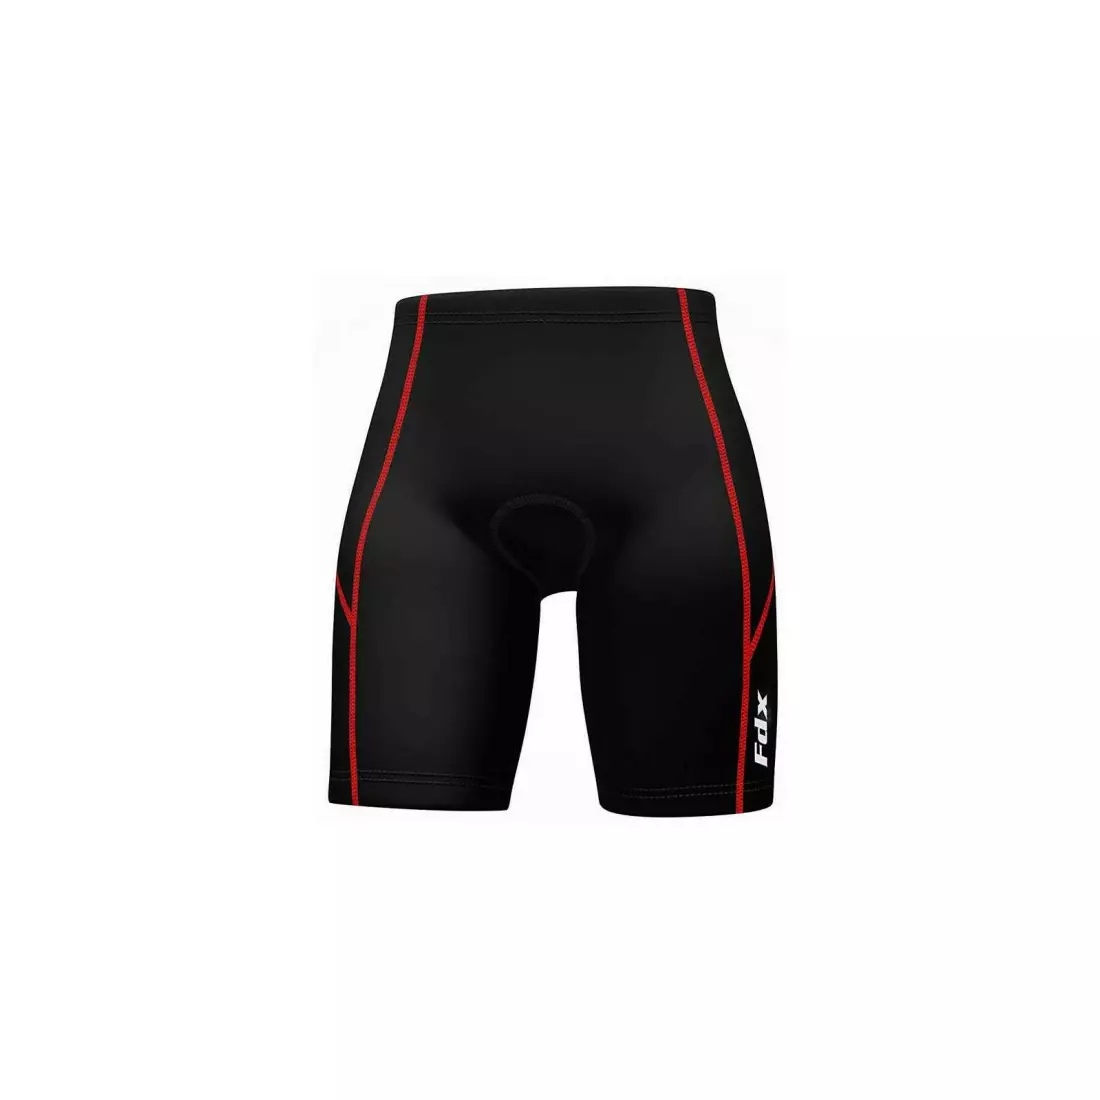 FDX 1600 men's cycling shorts, black - red seam